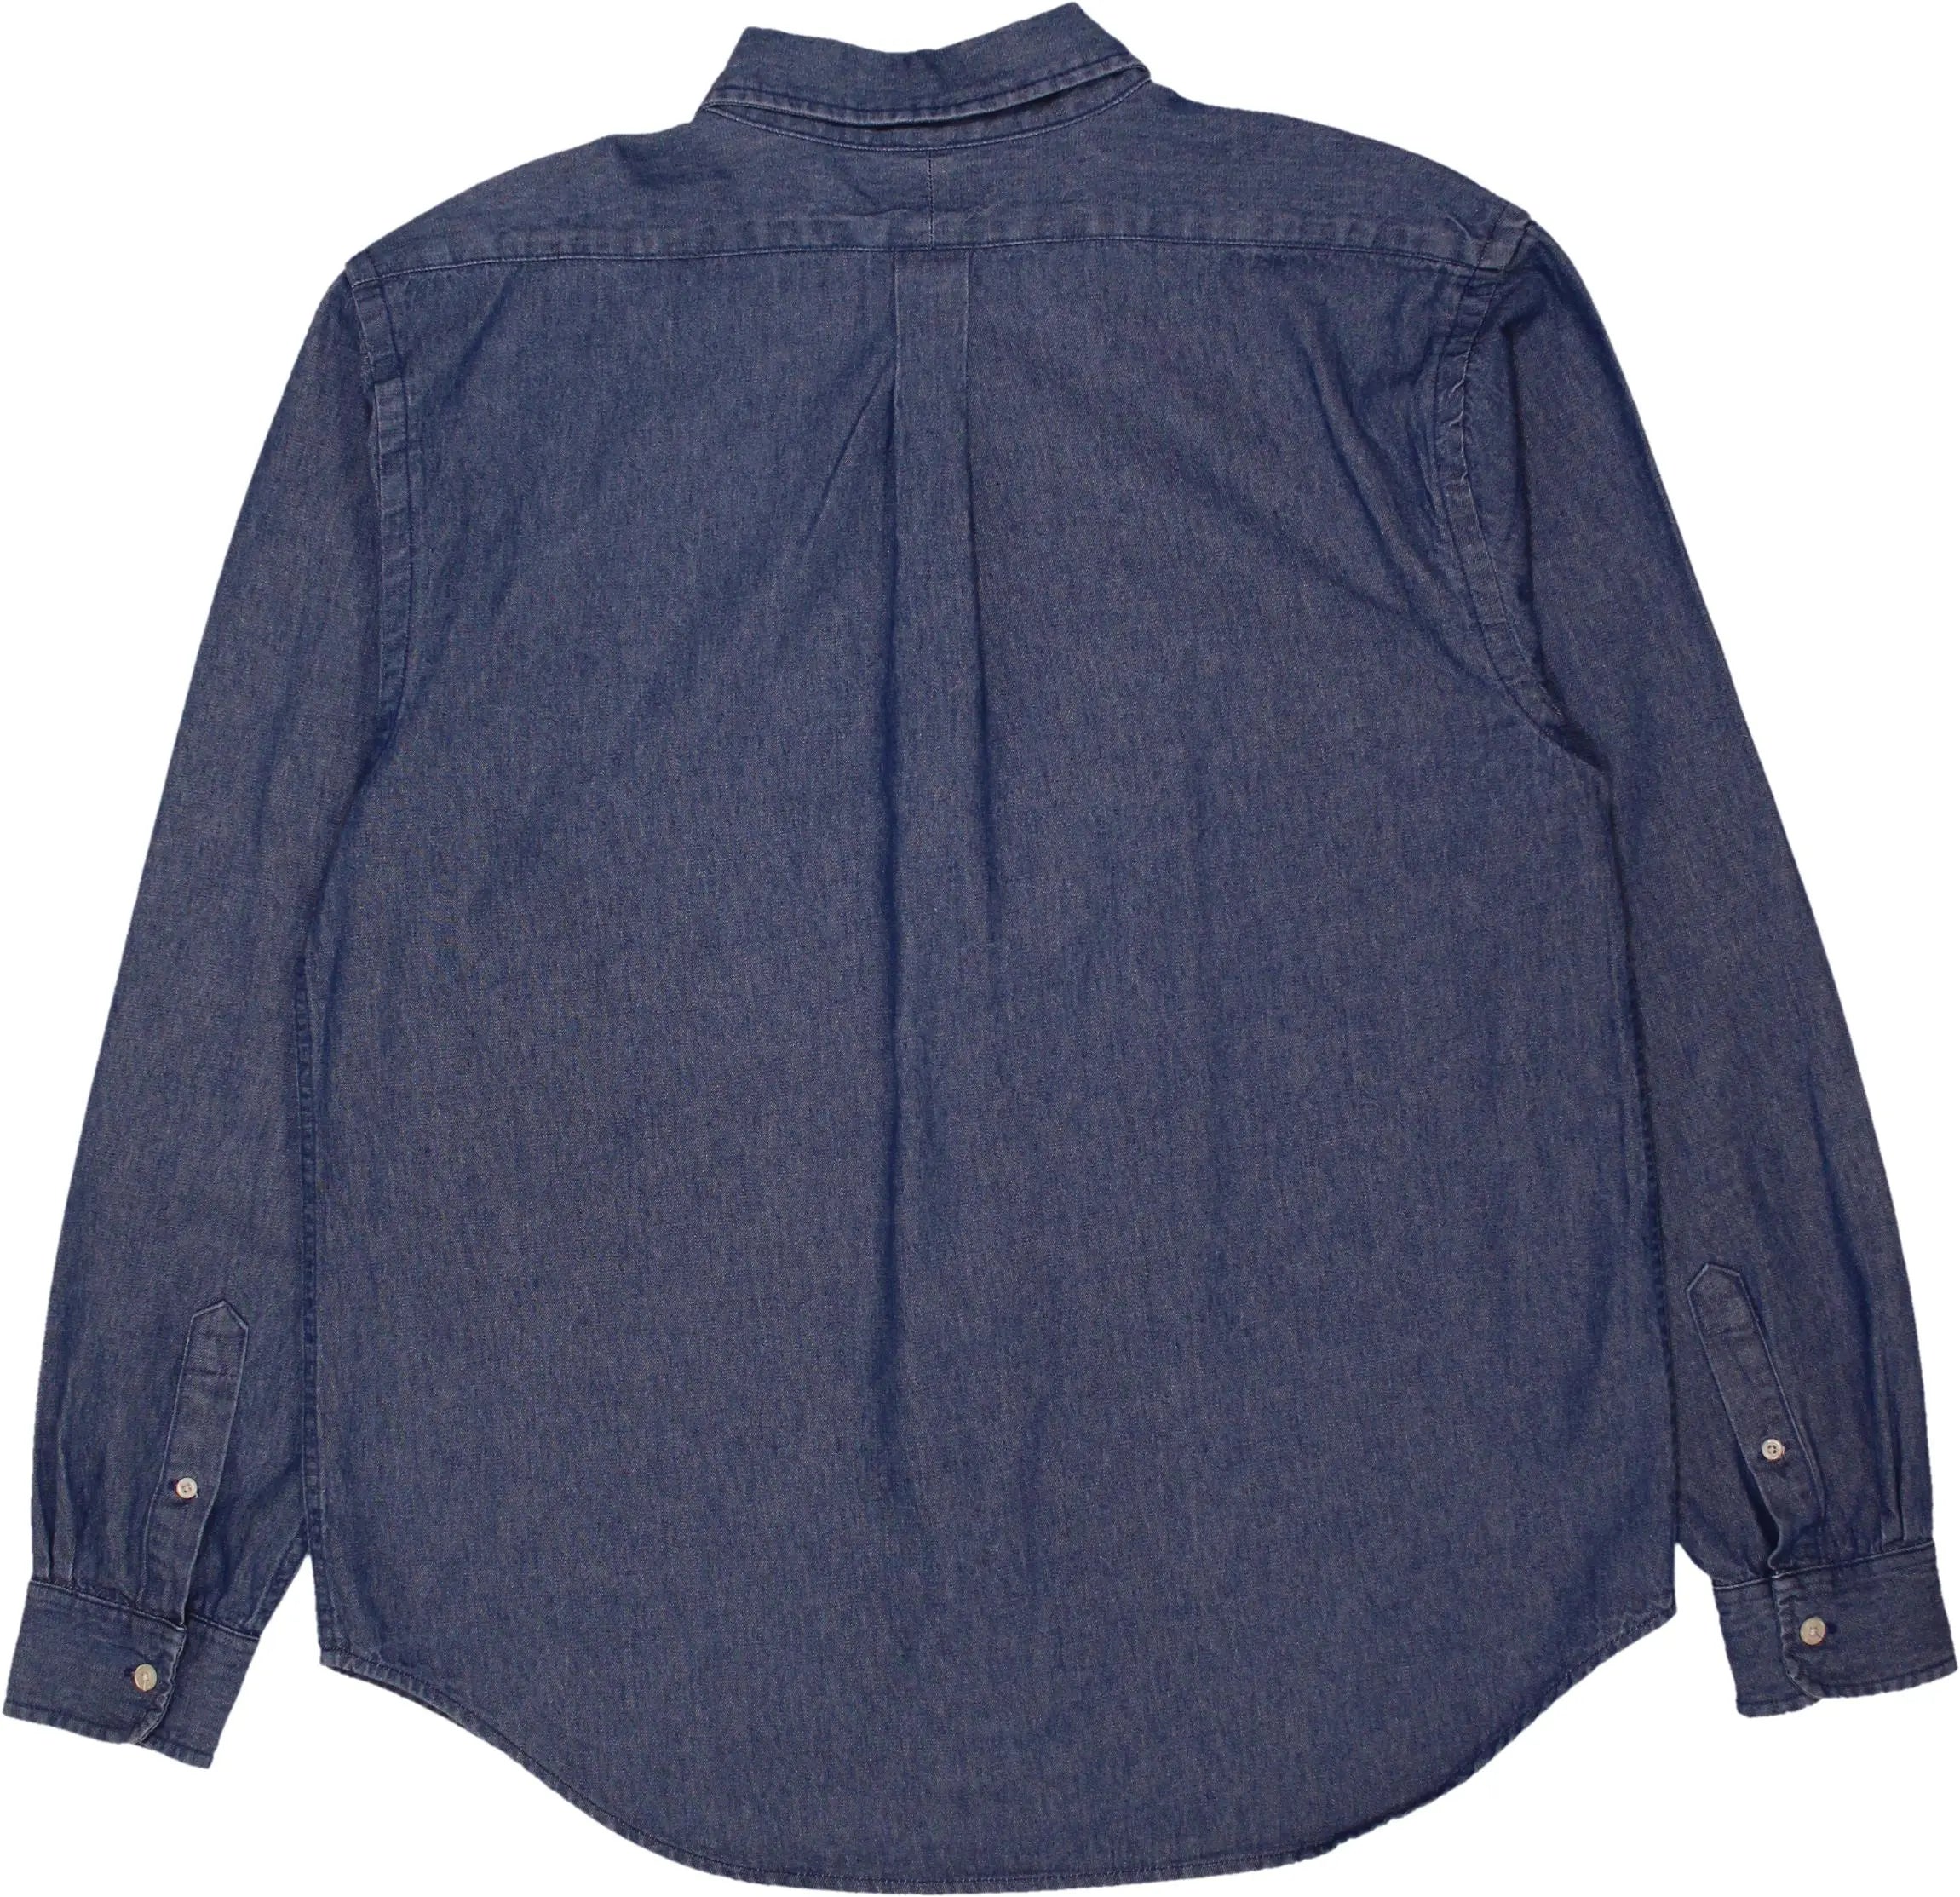 Ralph Lauren - Vintage Denim Shirt by Ralph Lauren- ThriftTale.com - Vintage and second handclothing